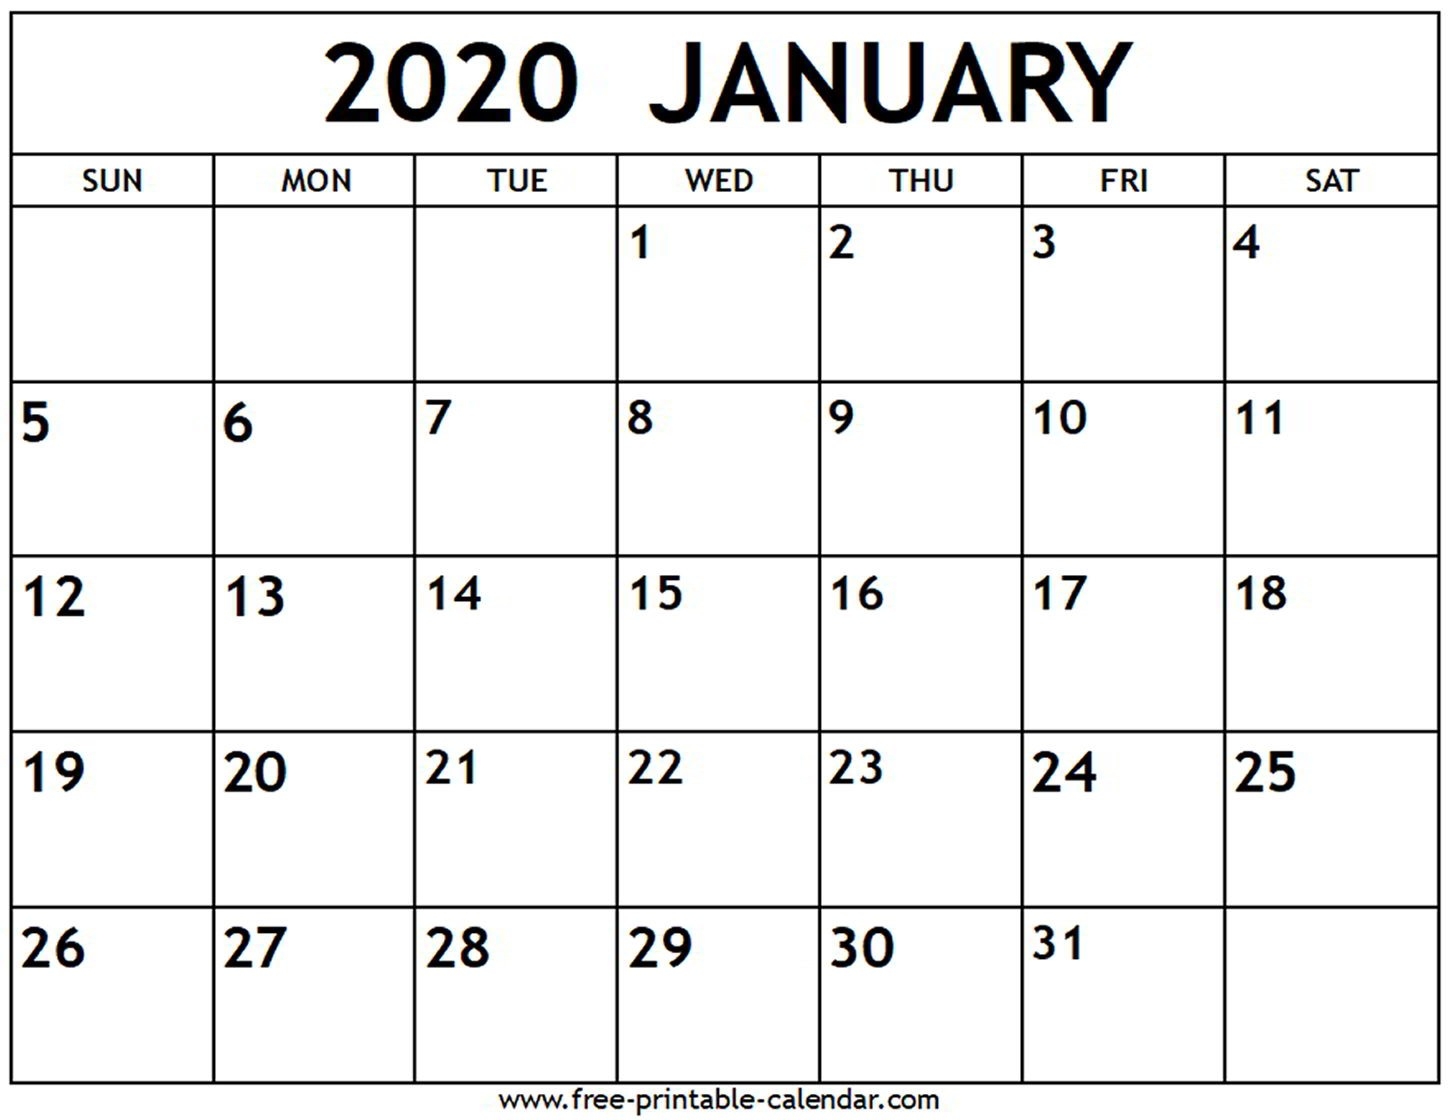 January 2020 Calendar - Free-Printable-Calendar-2020 January February Calendar